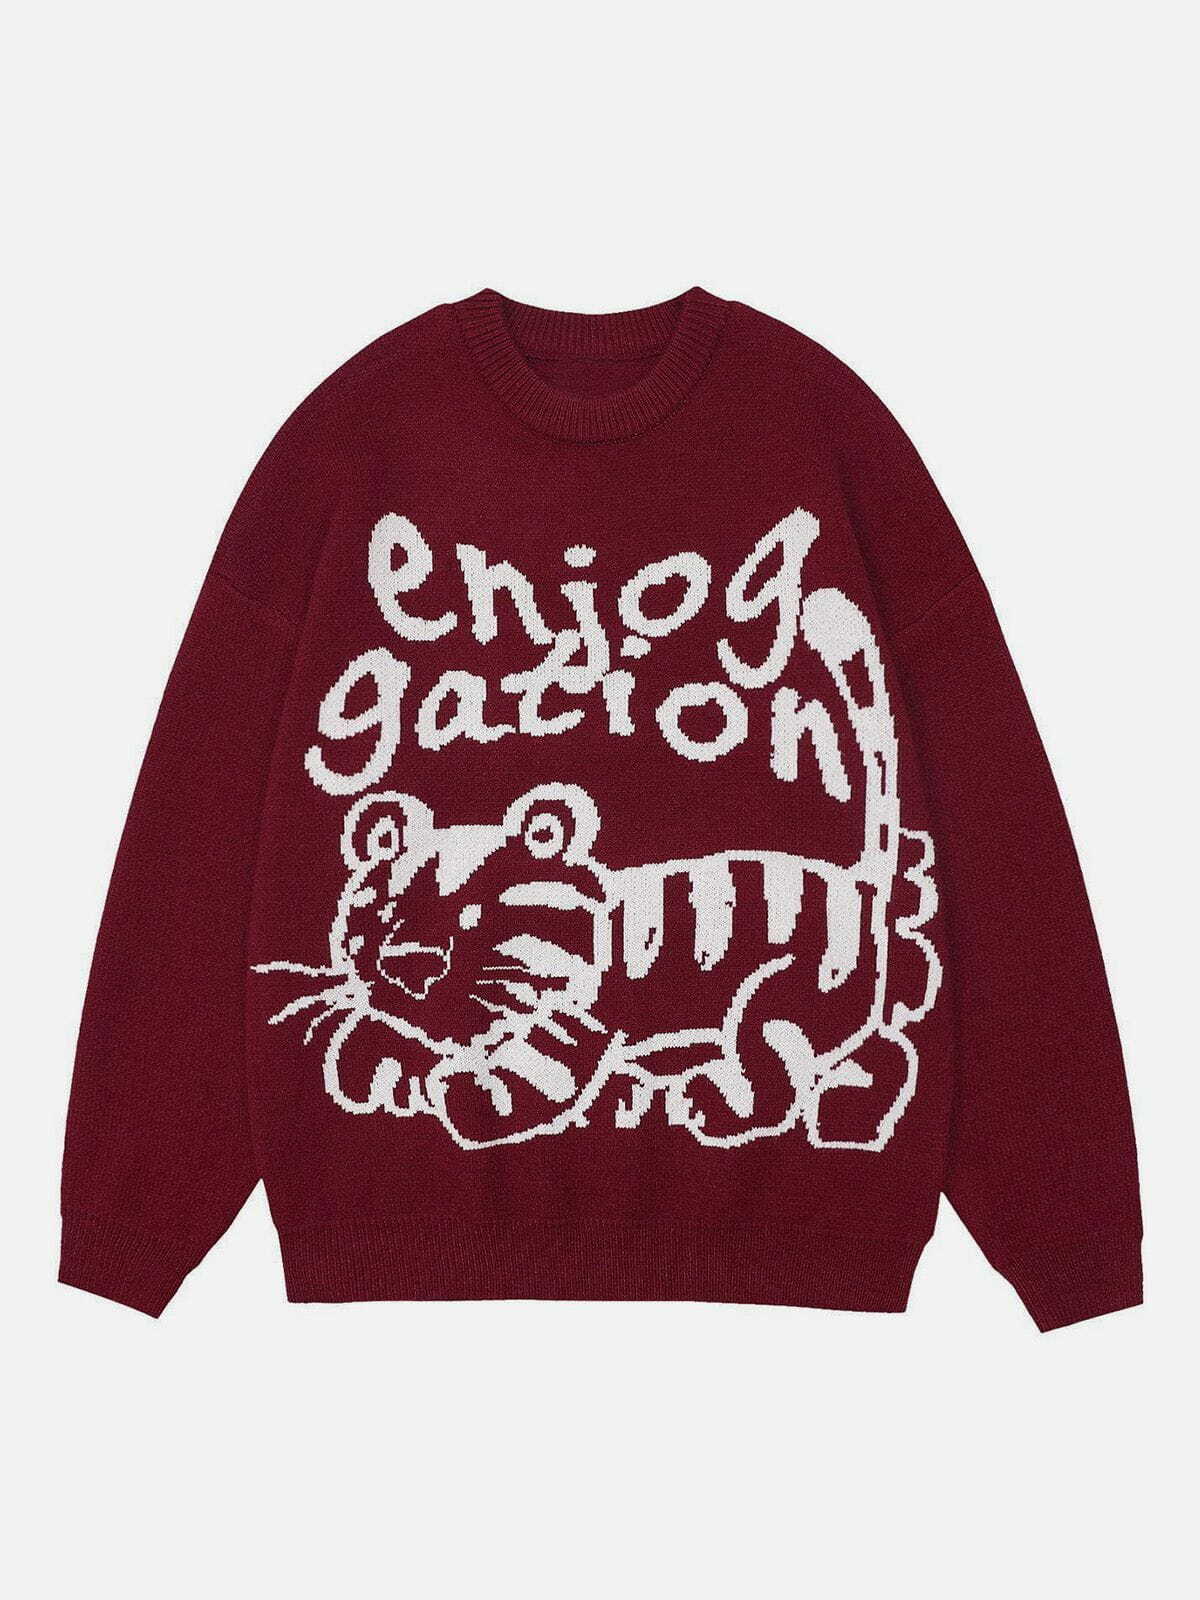 tiger print knit sweater edgy & vibrant streetwear 7384